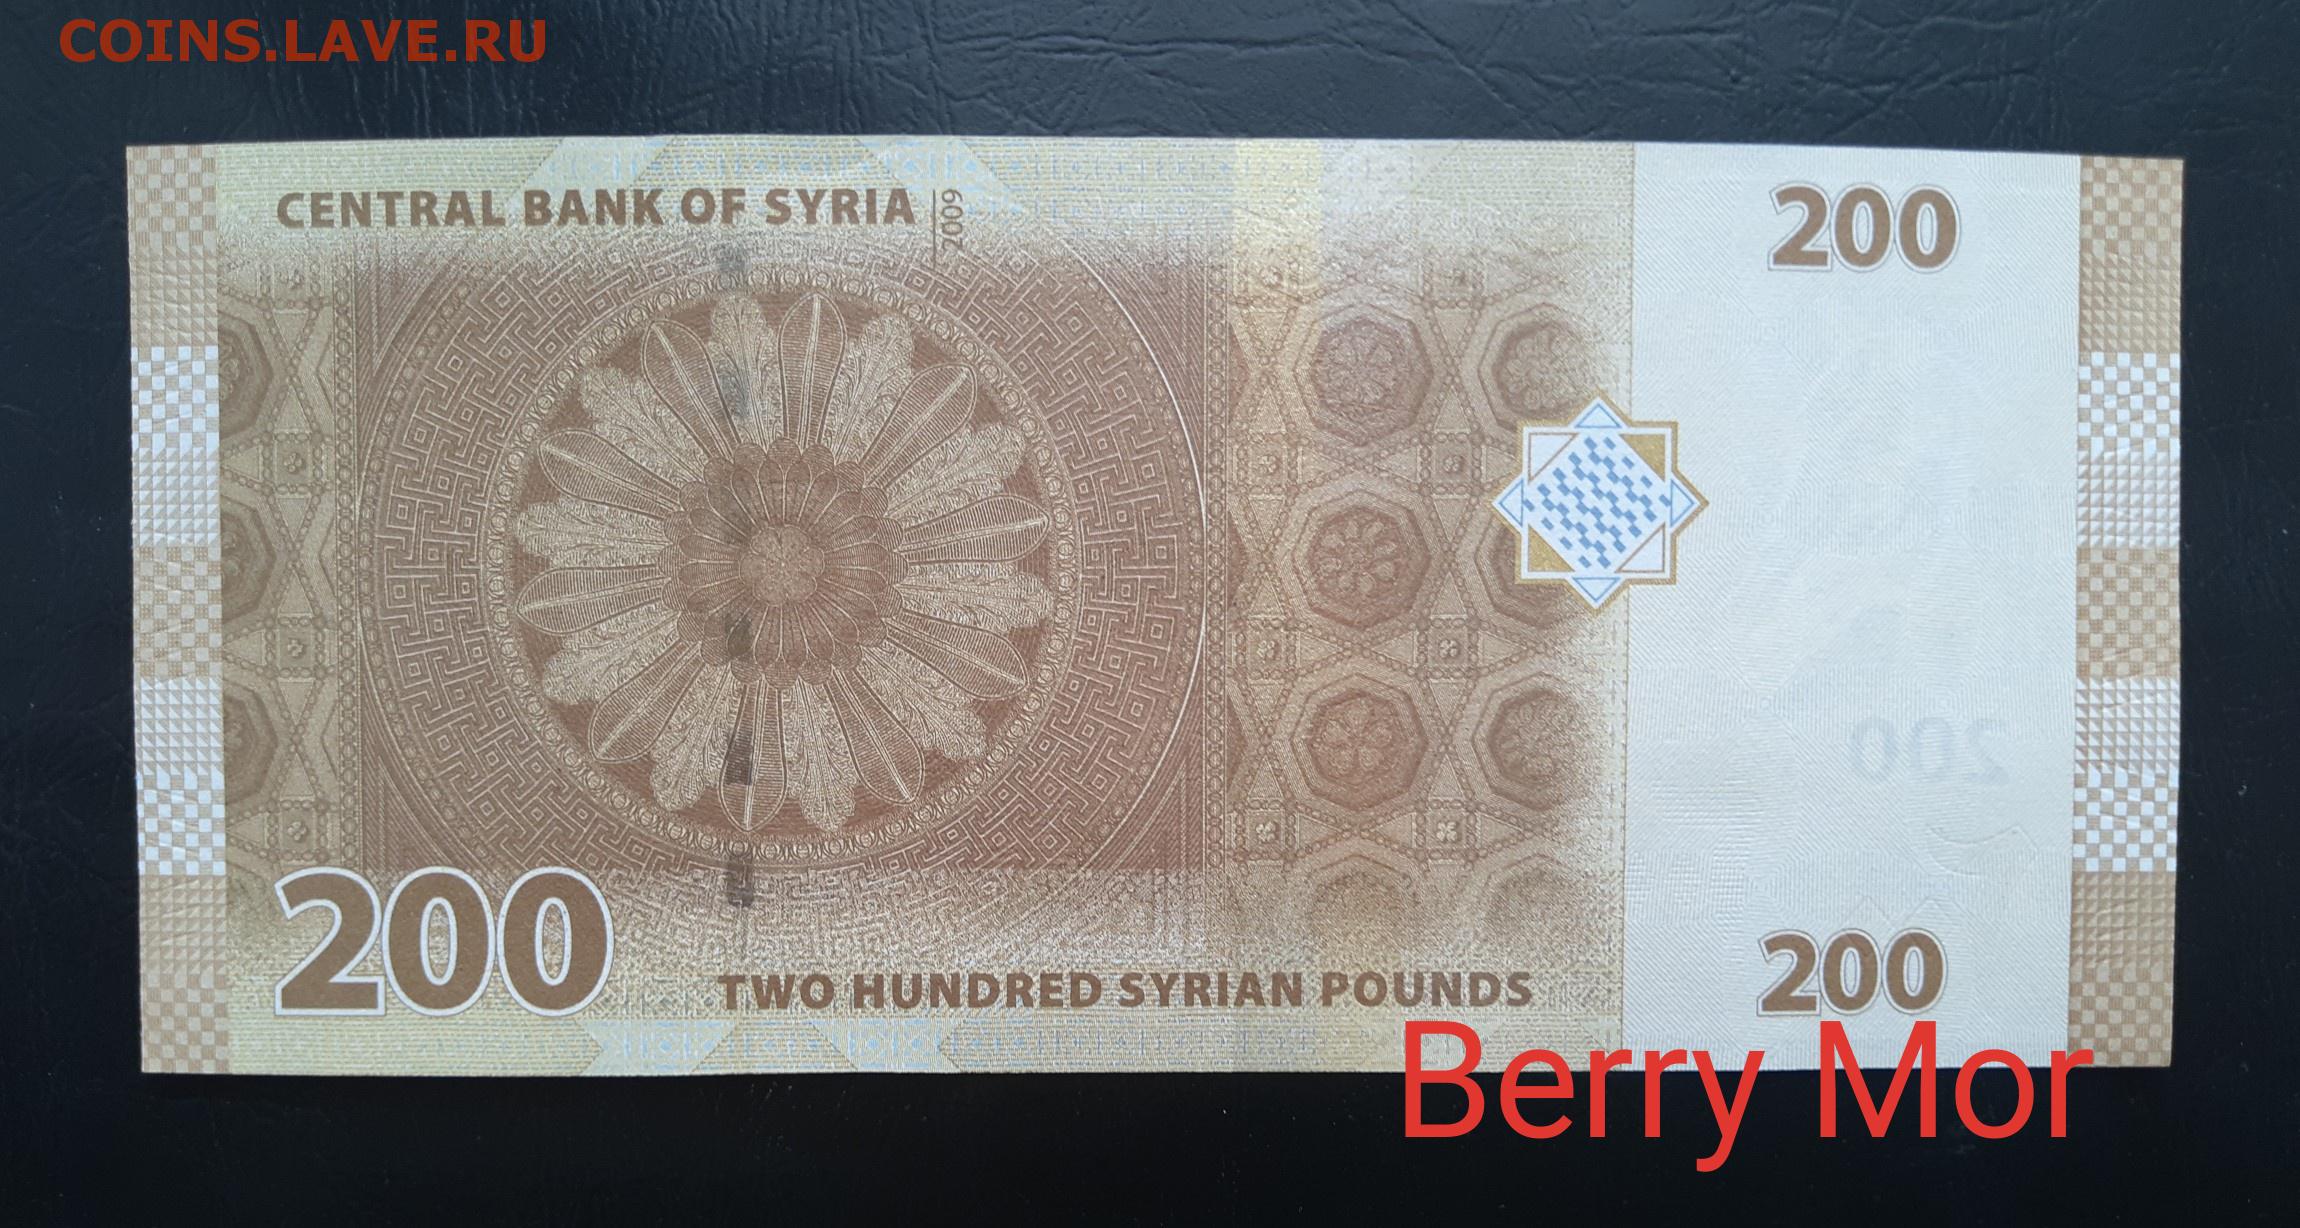 20000000 фунтов в рублях. 200 Сирийских фунтов. 200 Фунтов в рублях. 200 Syrian pounds в рублях. 200 Syria в рублях.